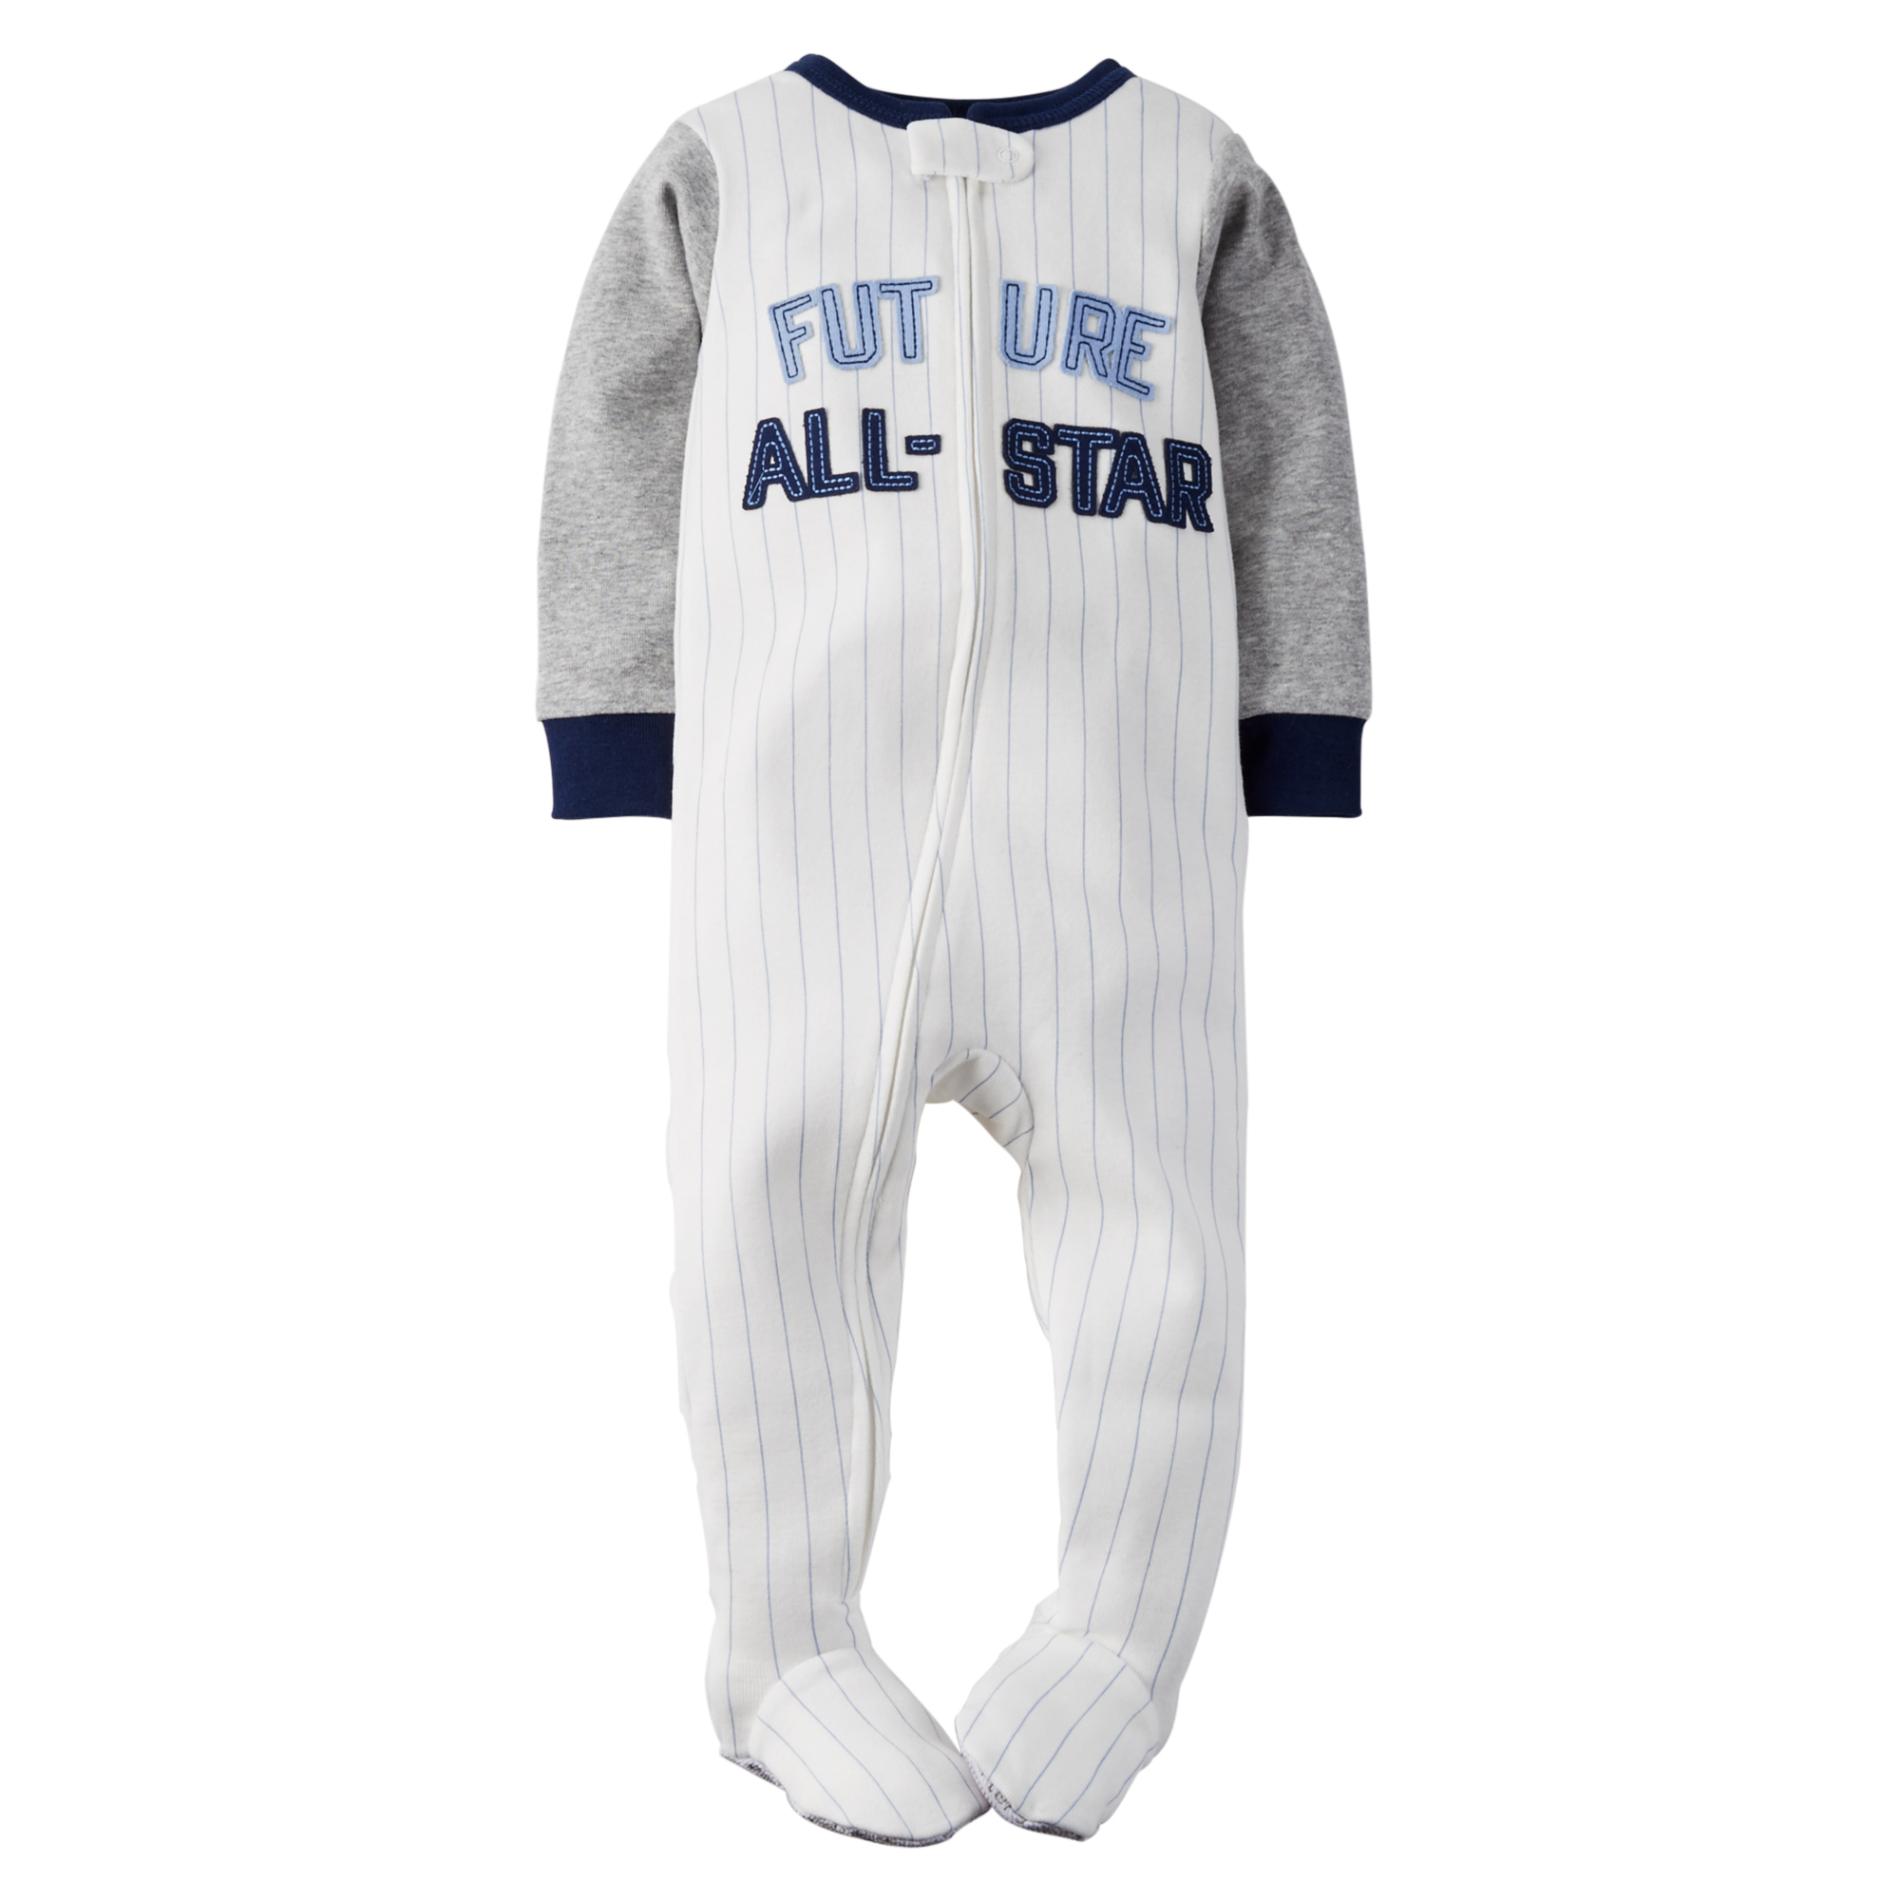 Carter's Toddler Boy's Footed Pajamas - Baseball Uniform